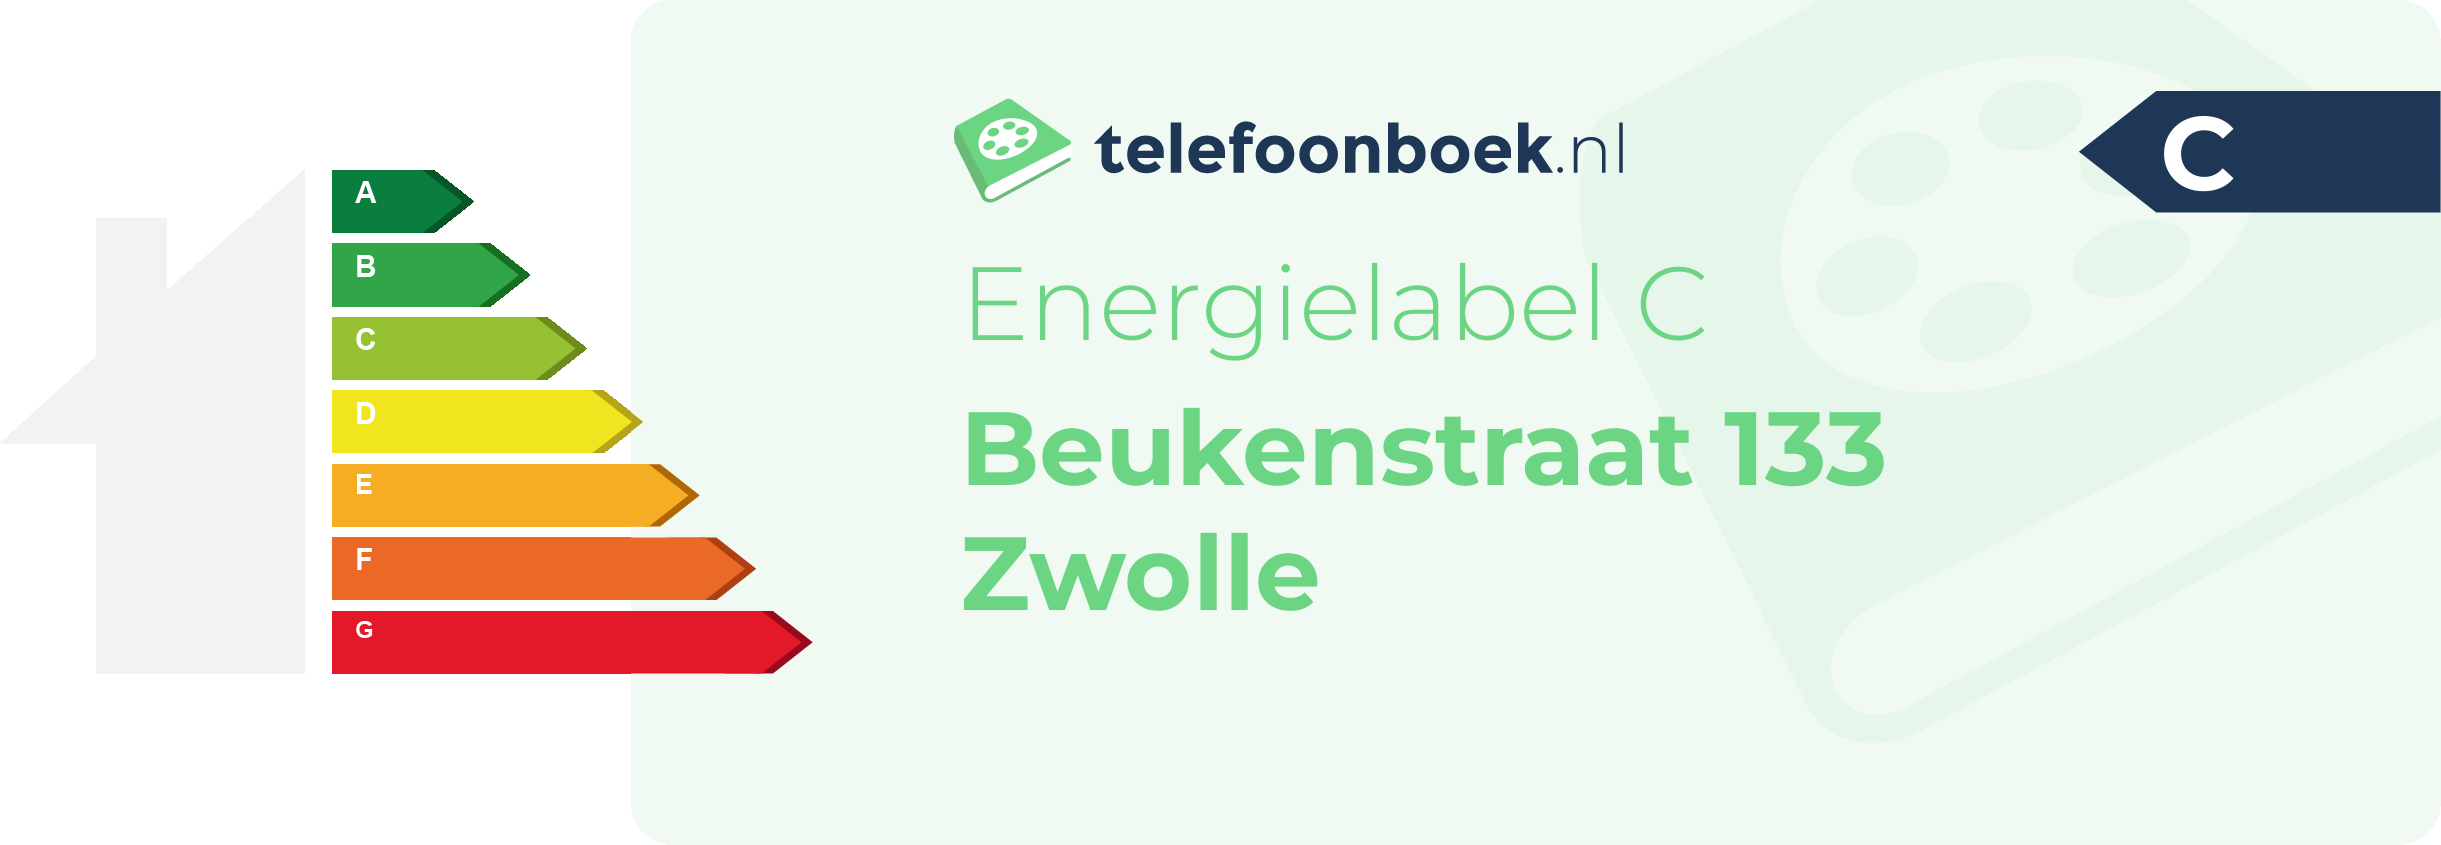 Energielabel Beukenstraat 133 Zwolle